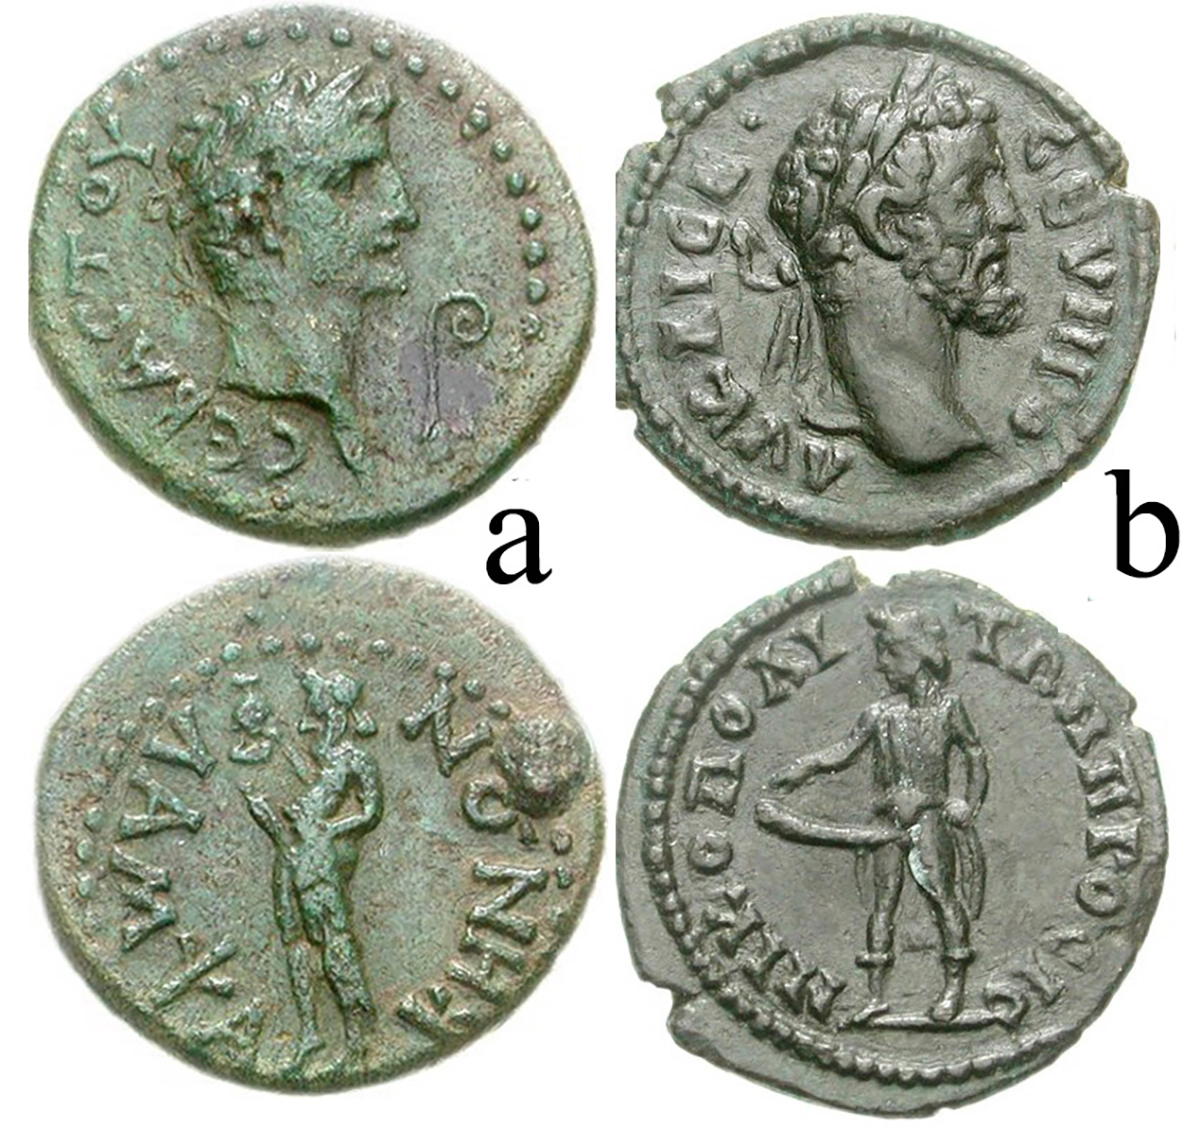 Figure 4: Priapus. a) Mysia, Lampsacus. Augustus. 27 BCE - 14 CE. AE 17mm (3.62 g.). Laureatehead right; lituus to right / Ithyphallic Priapus standing left, holding oenochoe, RPC 2276 (same dies). b) 193-211 CE, AE Assarion (2.86 g.). Niconolis ad Istrum in Moesia Inferior. Laureate head right / Ithyphallic Priapus standing left, pointing downward with right hand at his erect phallus, left hand on hip, AMNG 1380.